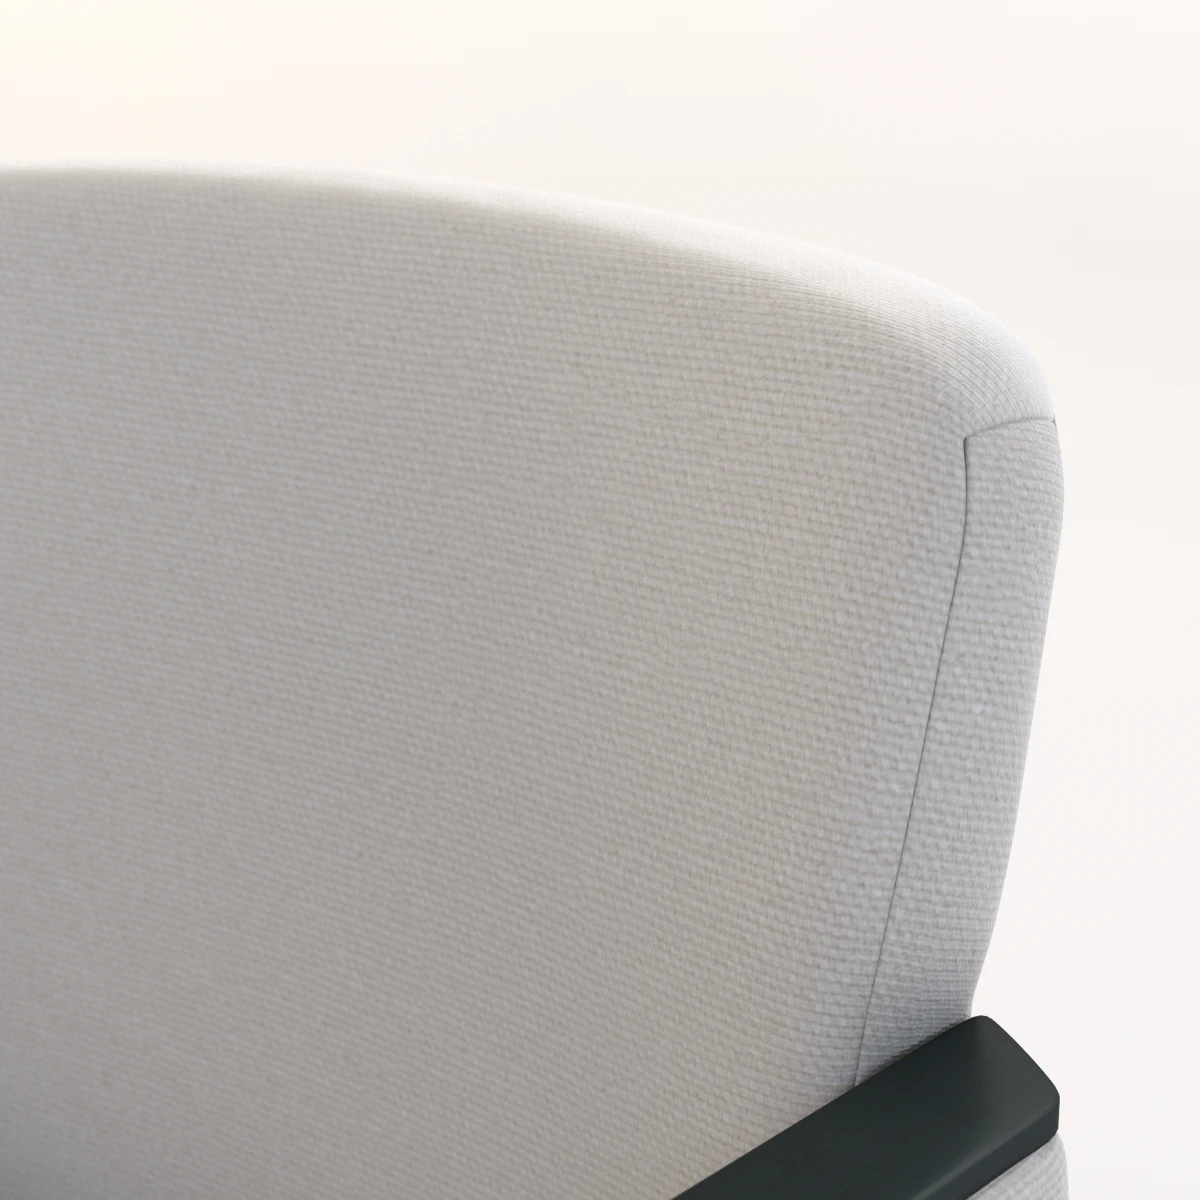 Nemschoff Evita Lounge Seating 3D Model_012